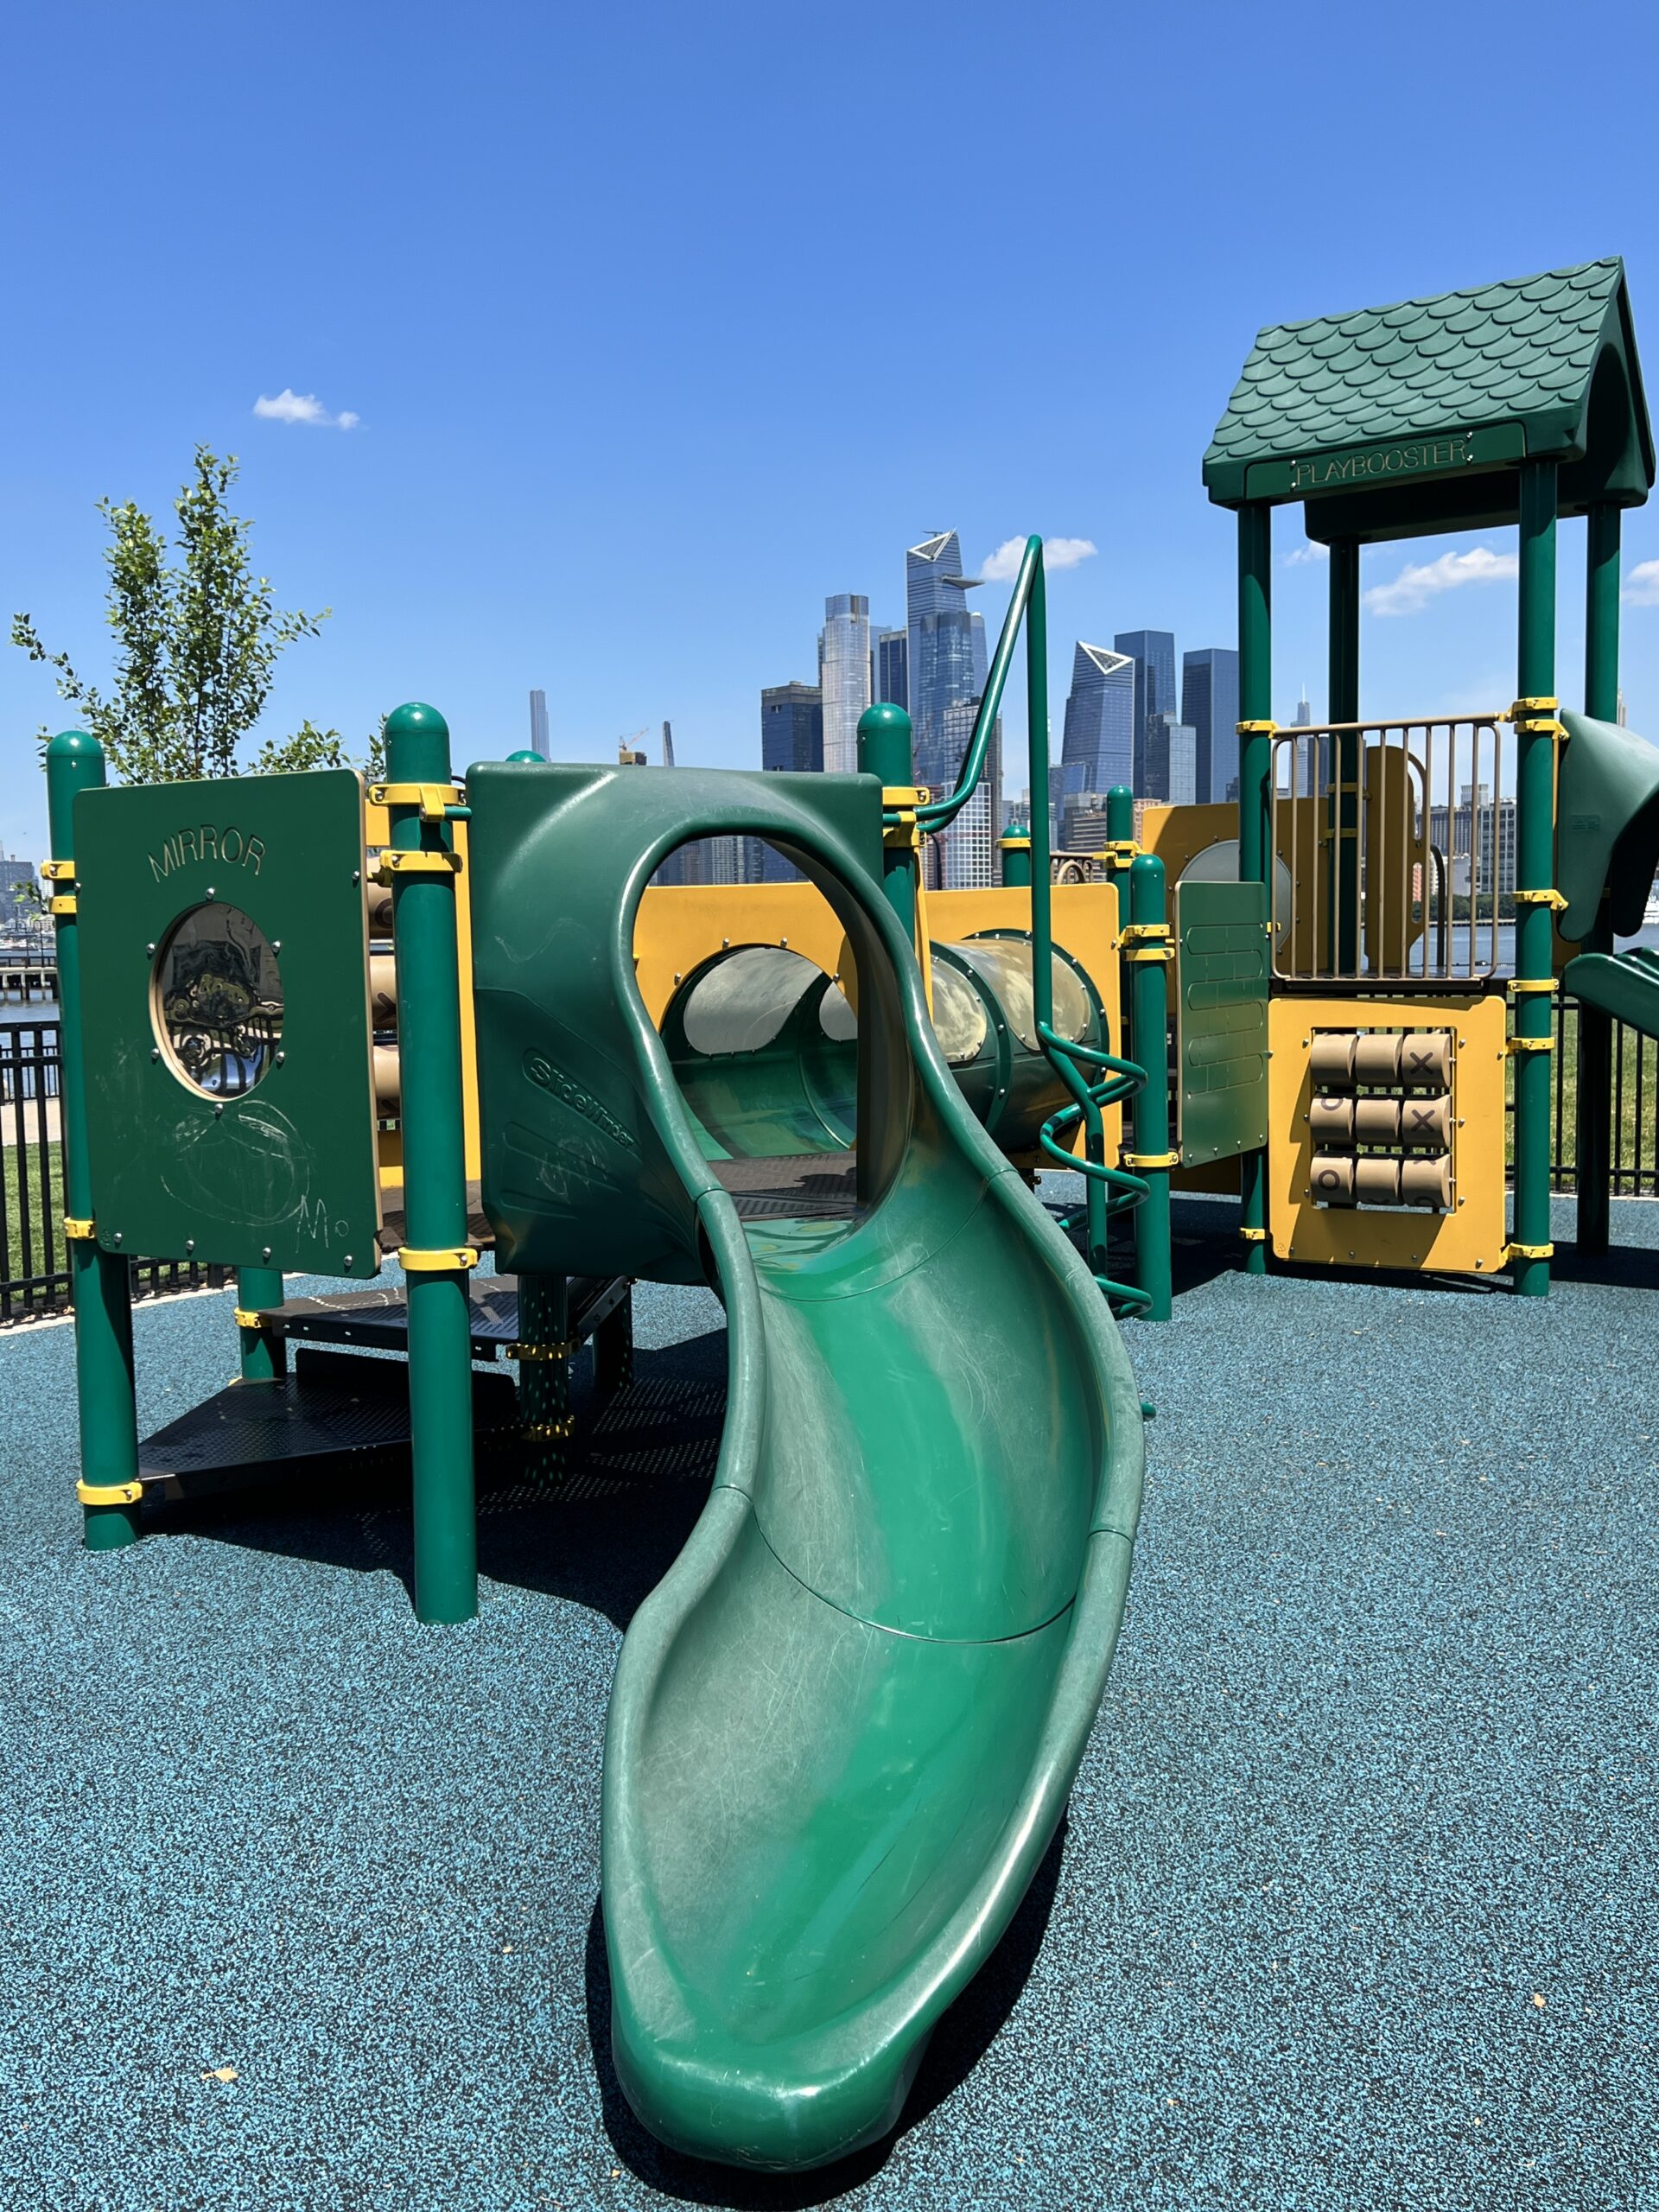 Maxwell Place Park Playground in Hoboken NJ - SLIDE - slightly curvy slide